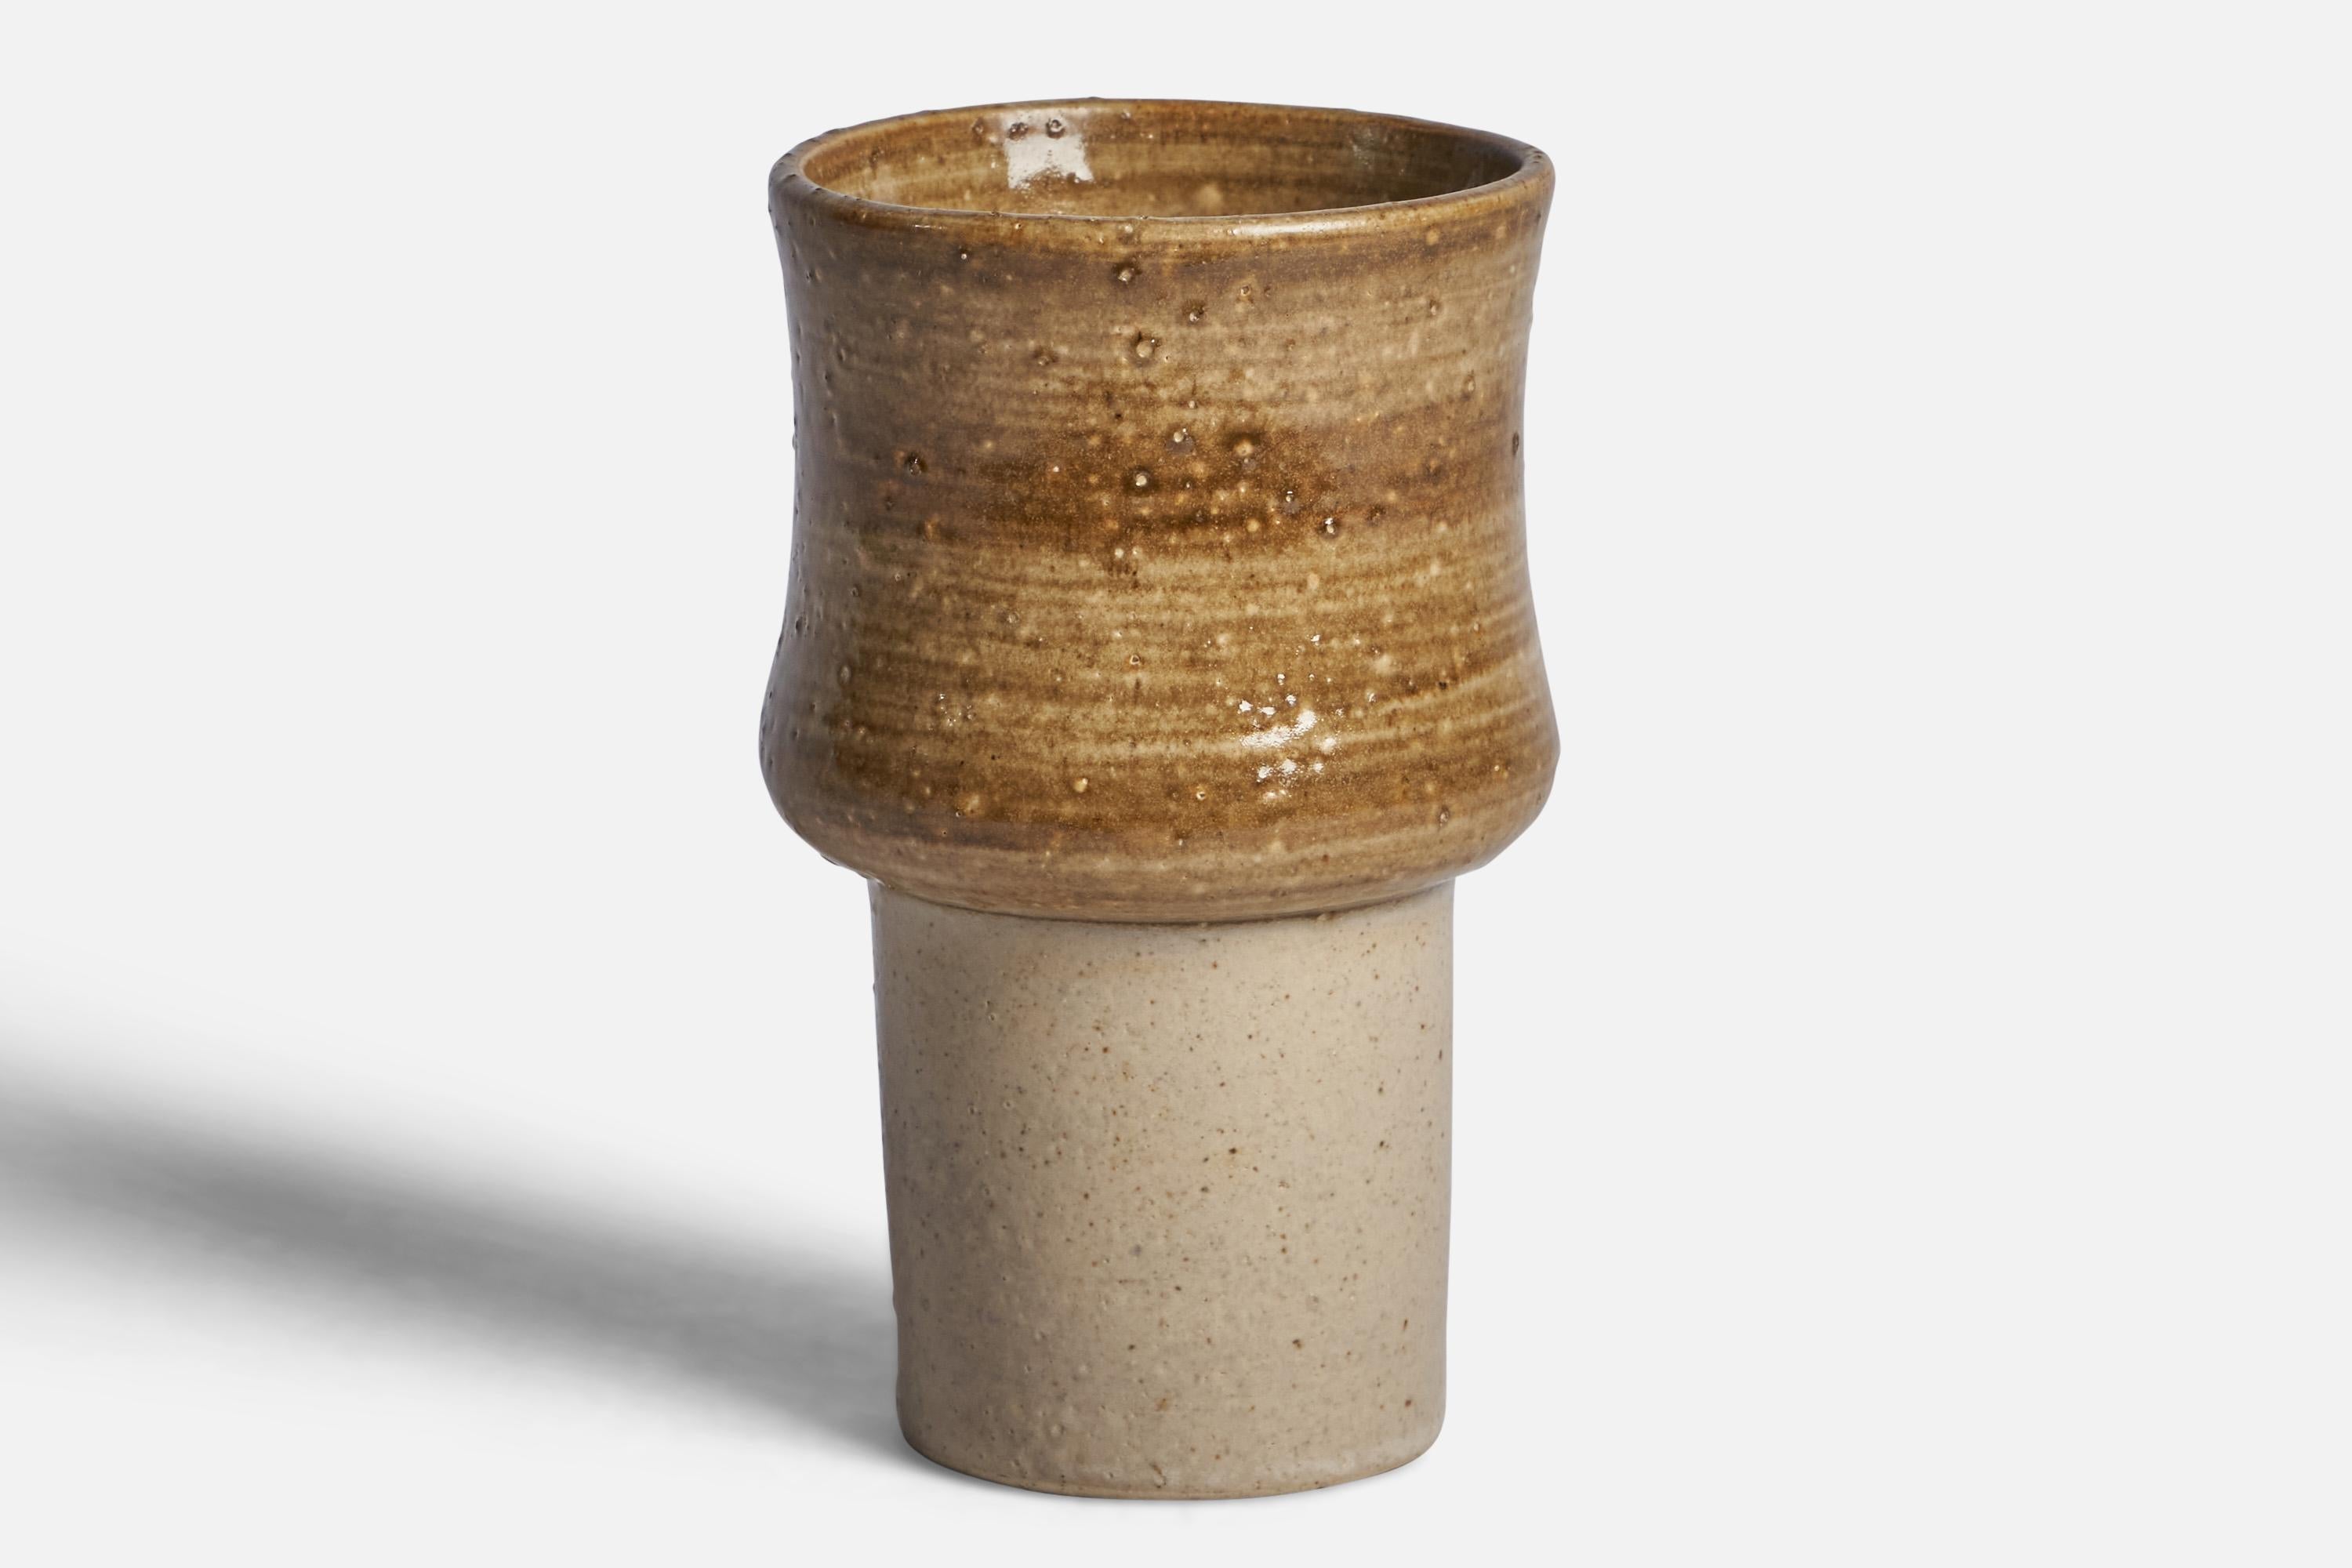 A brown and beige-glazed stoneware vase designed and produced by Åke Höganäs, Sweden, 1960s.